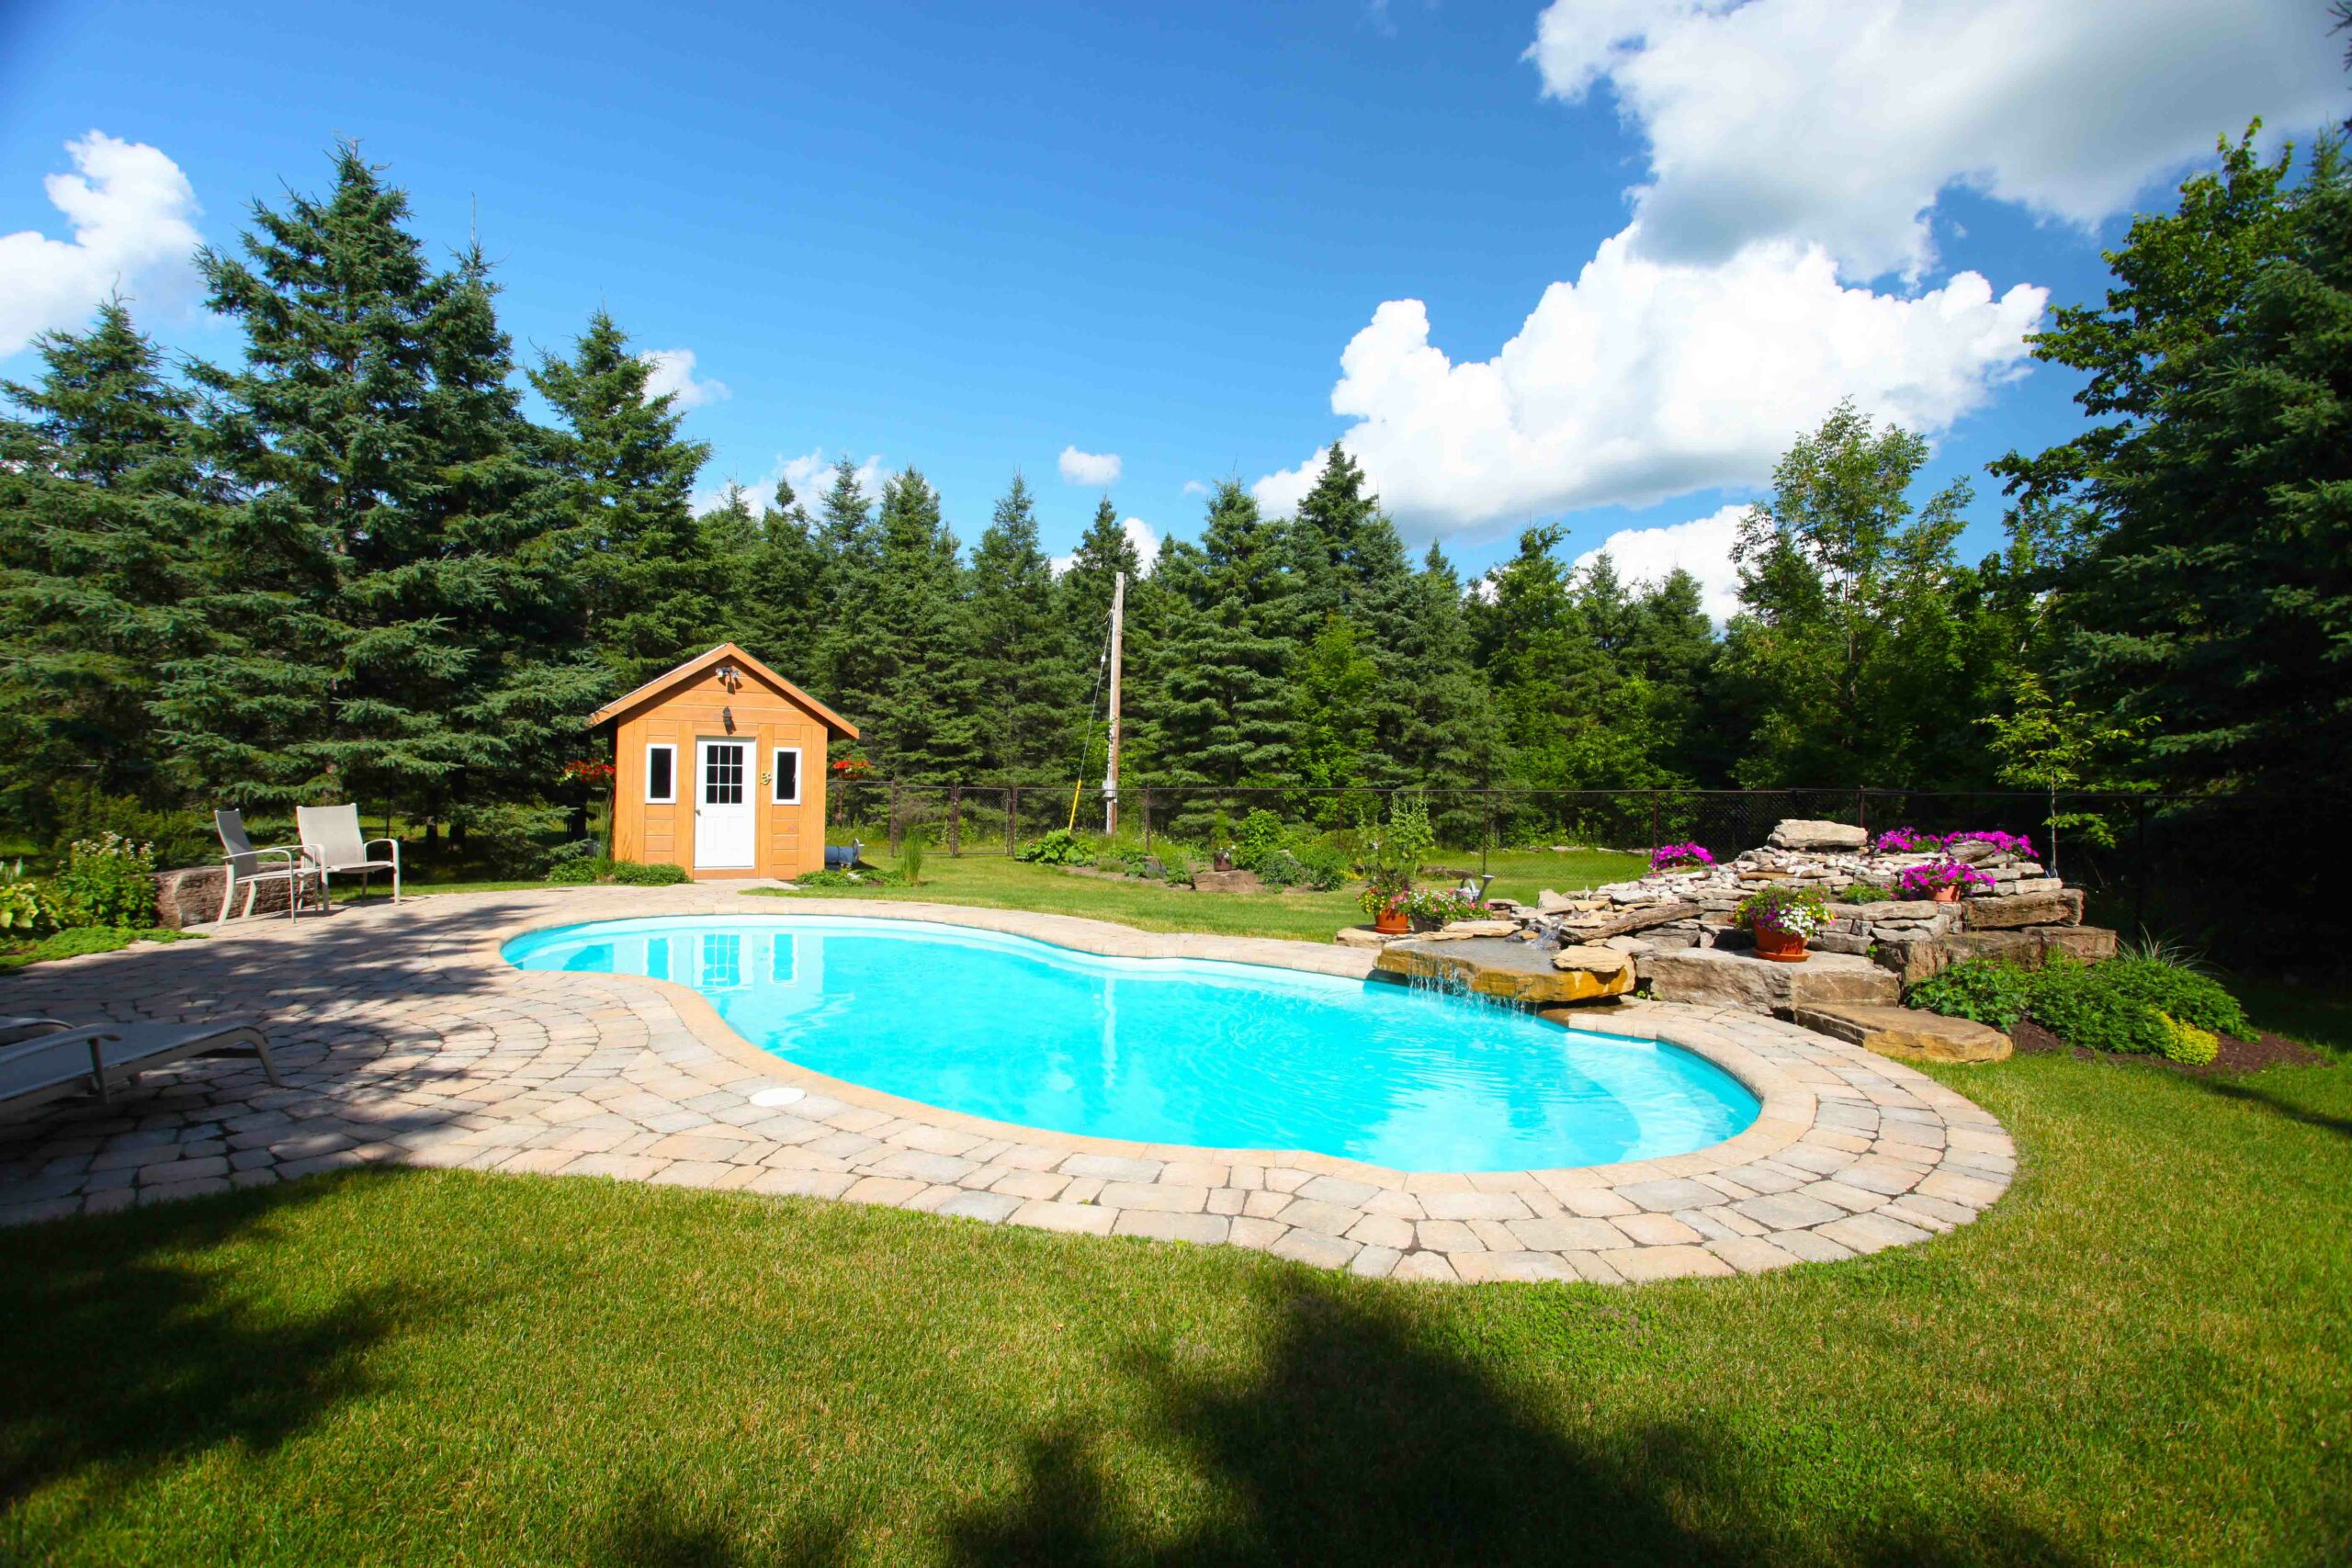 Why Choose San Juan Fiberglass Pools for Your Backyard Oasis?